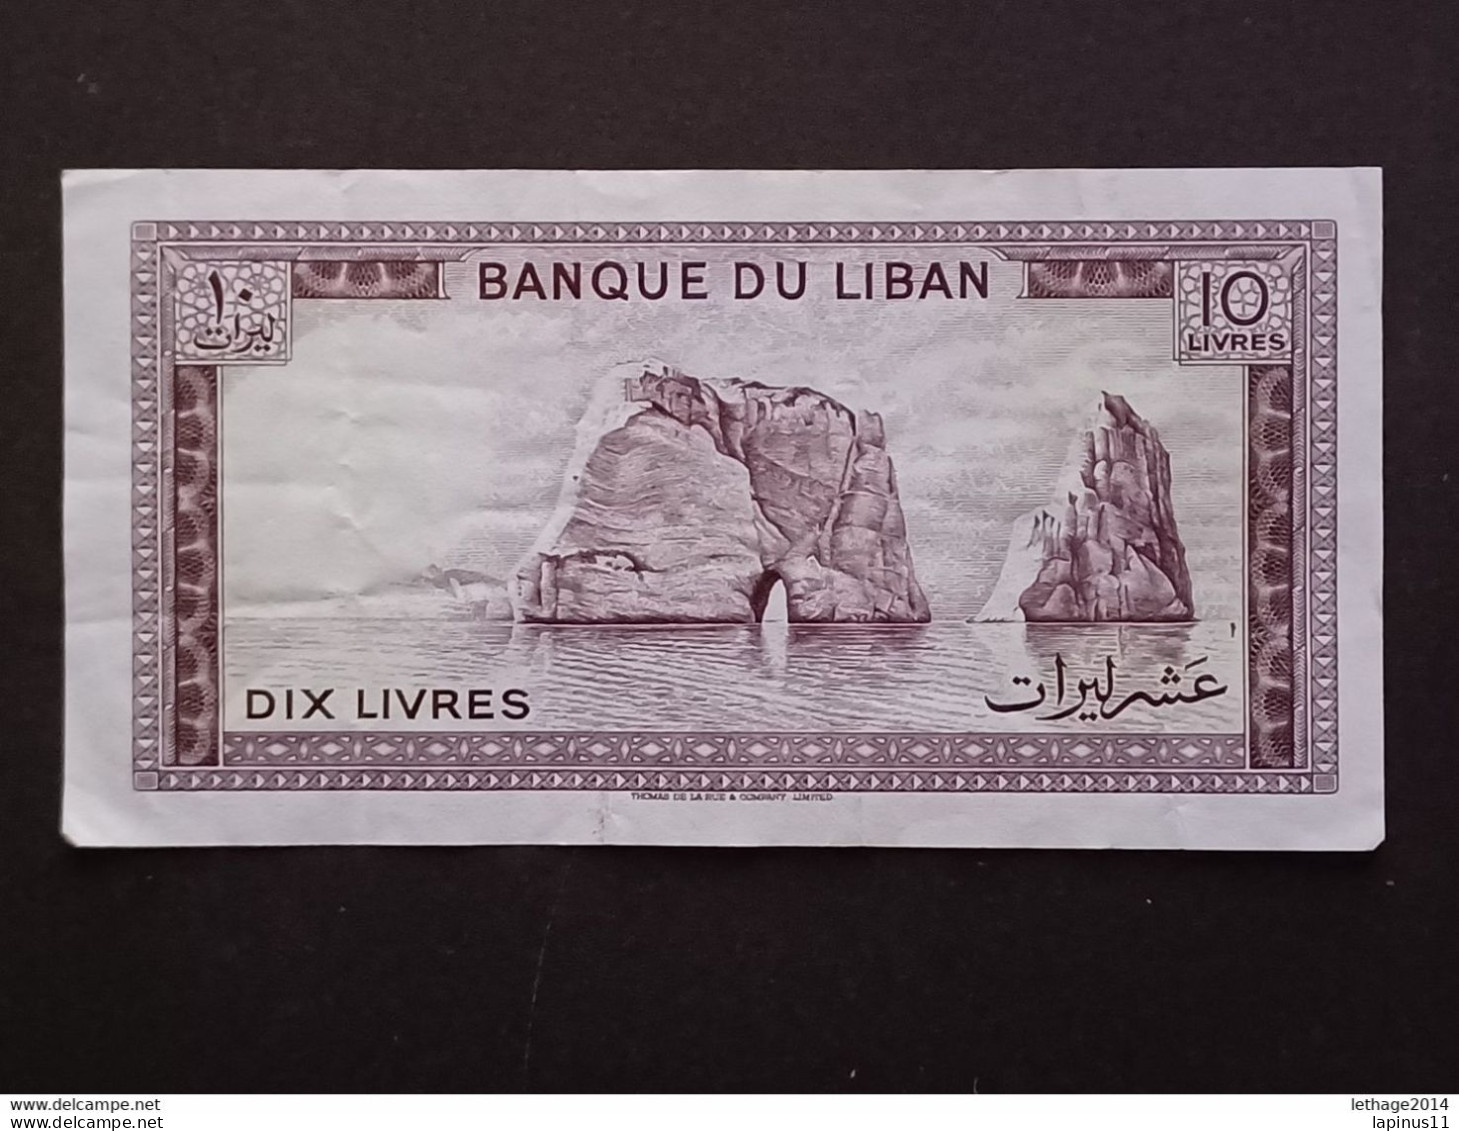 BANKNOTE LEBANON لبنان LIBAN 1983 25 LIVRES CIRCULATED GOOD CONDITION